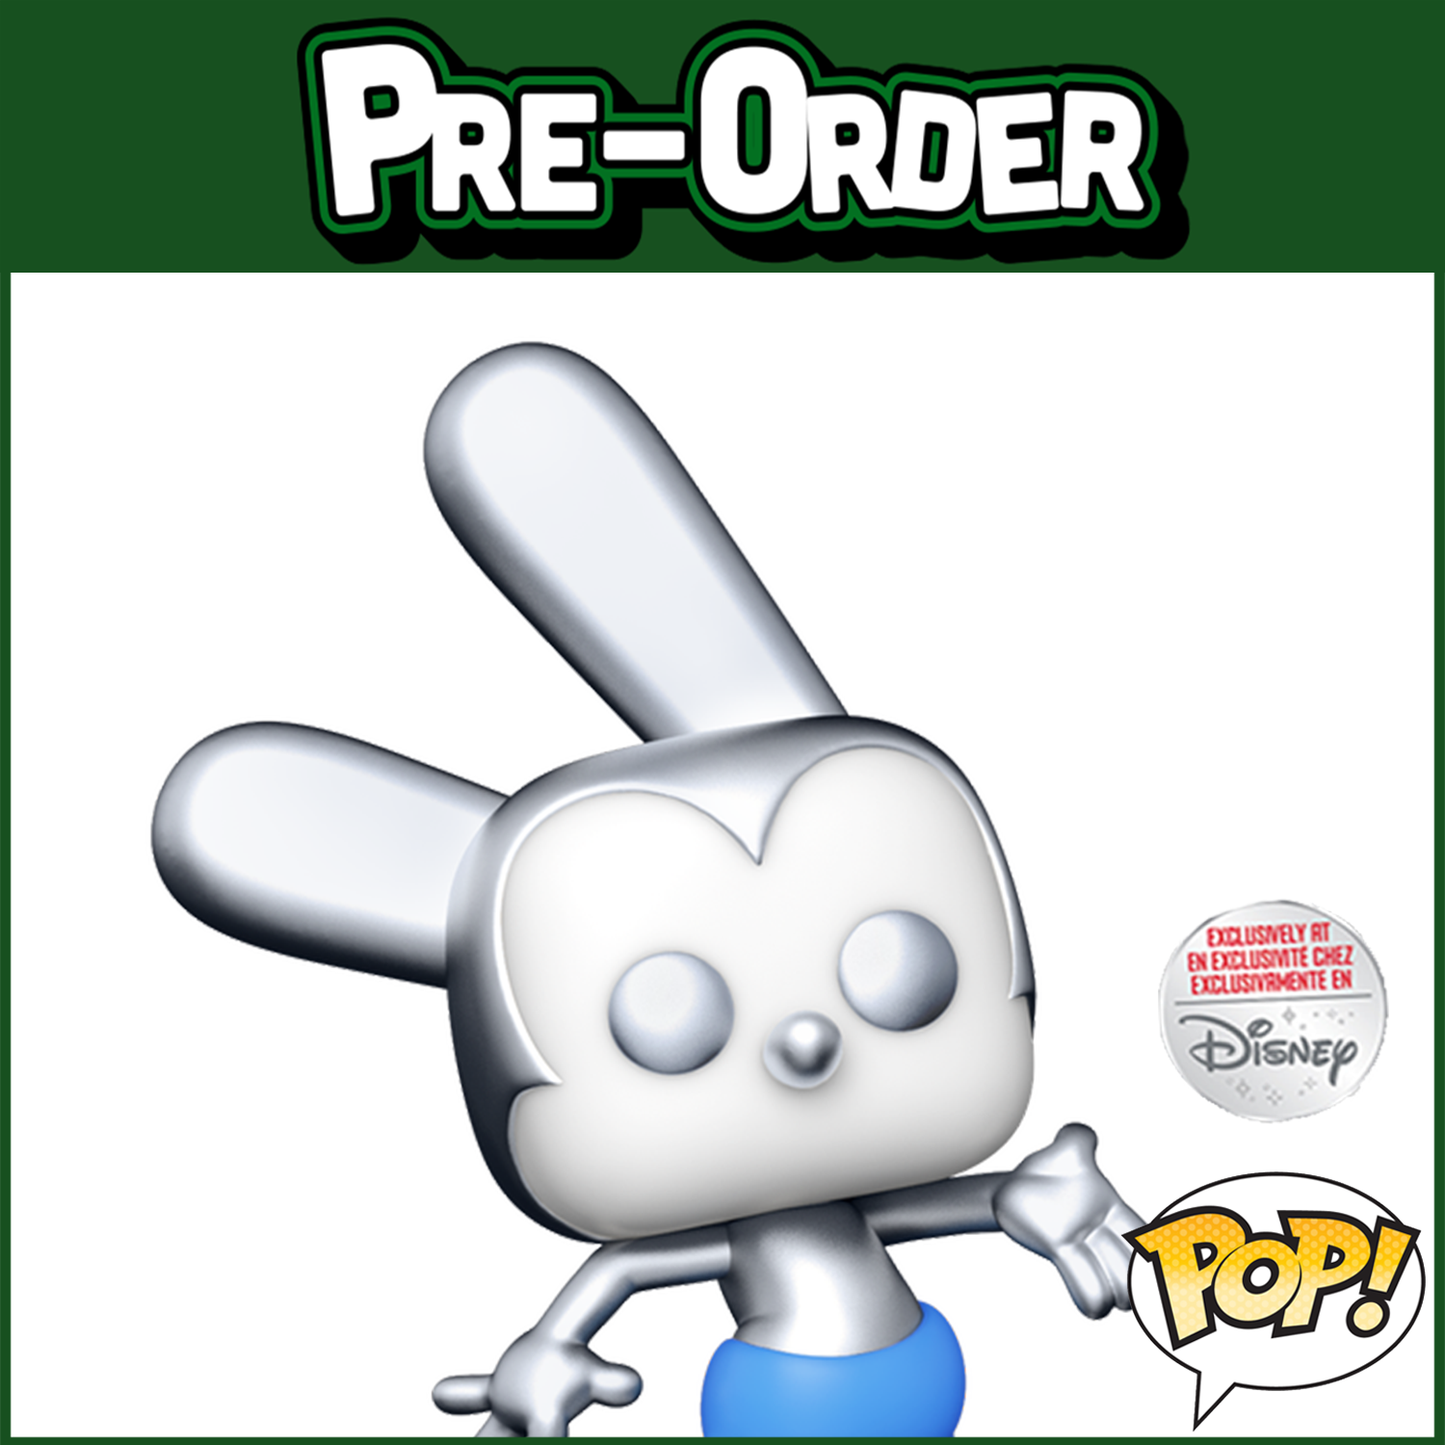 (PRE-ORDER) Funko POP! Disney: Oswald the Lucky Rabbit - Platinum (Disney Exclusive) #1350